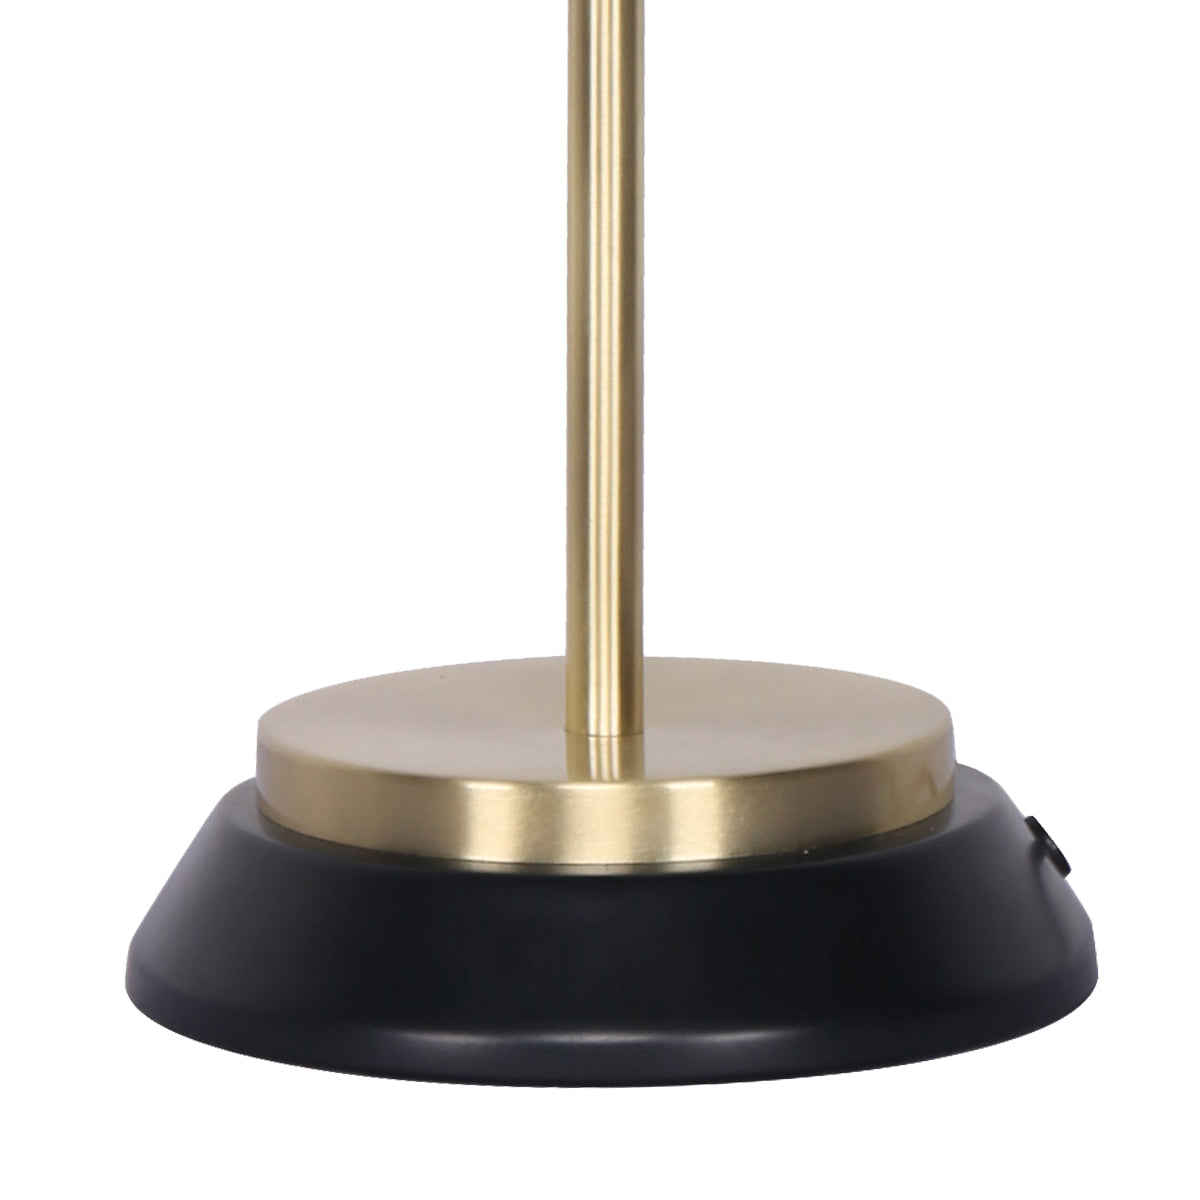 Sarantino Electric Reading Light Table Lamp Brass Finish - Black